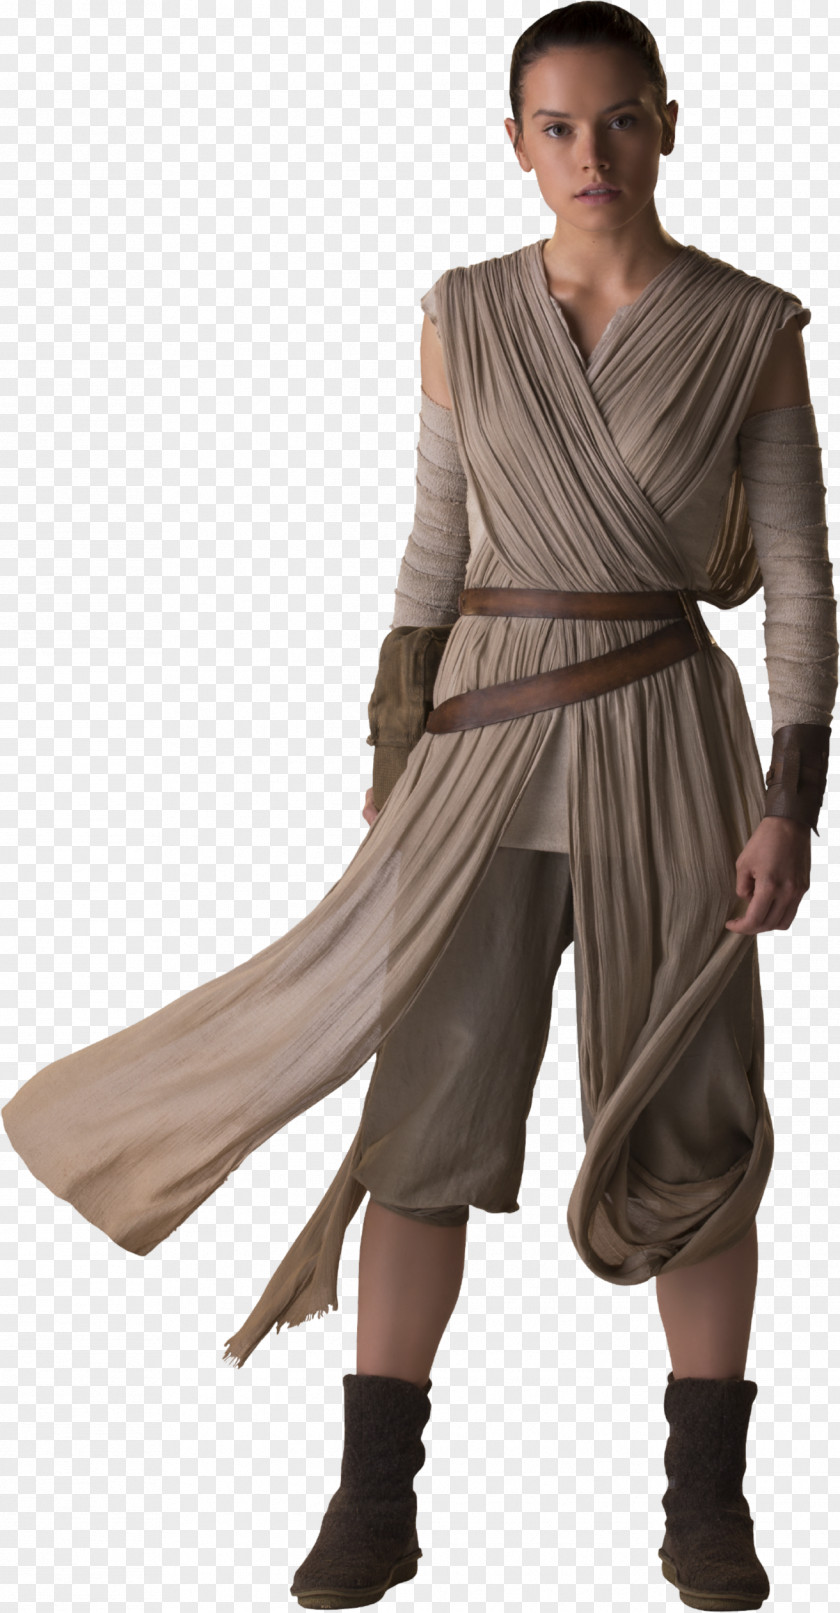 Bandage Rey Star Wars Episode VII Daisy Ridley Luke Skywalker Finn PNG